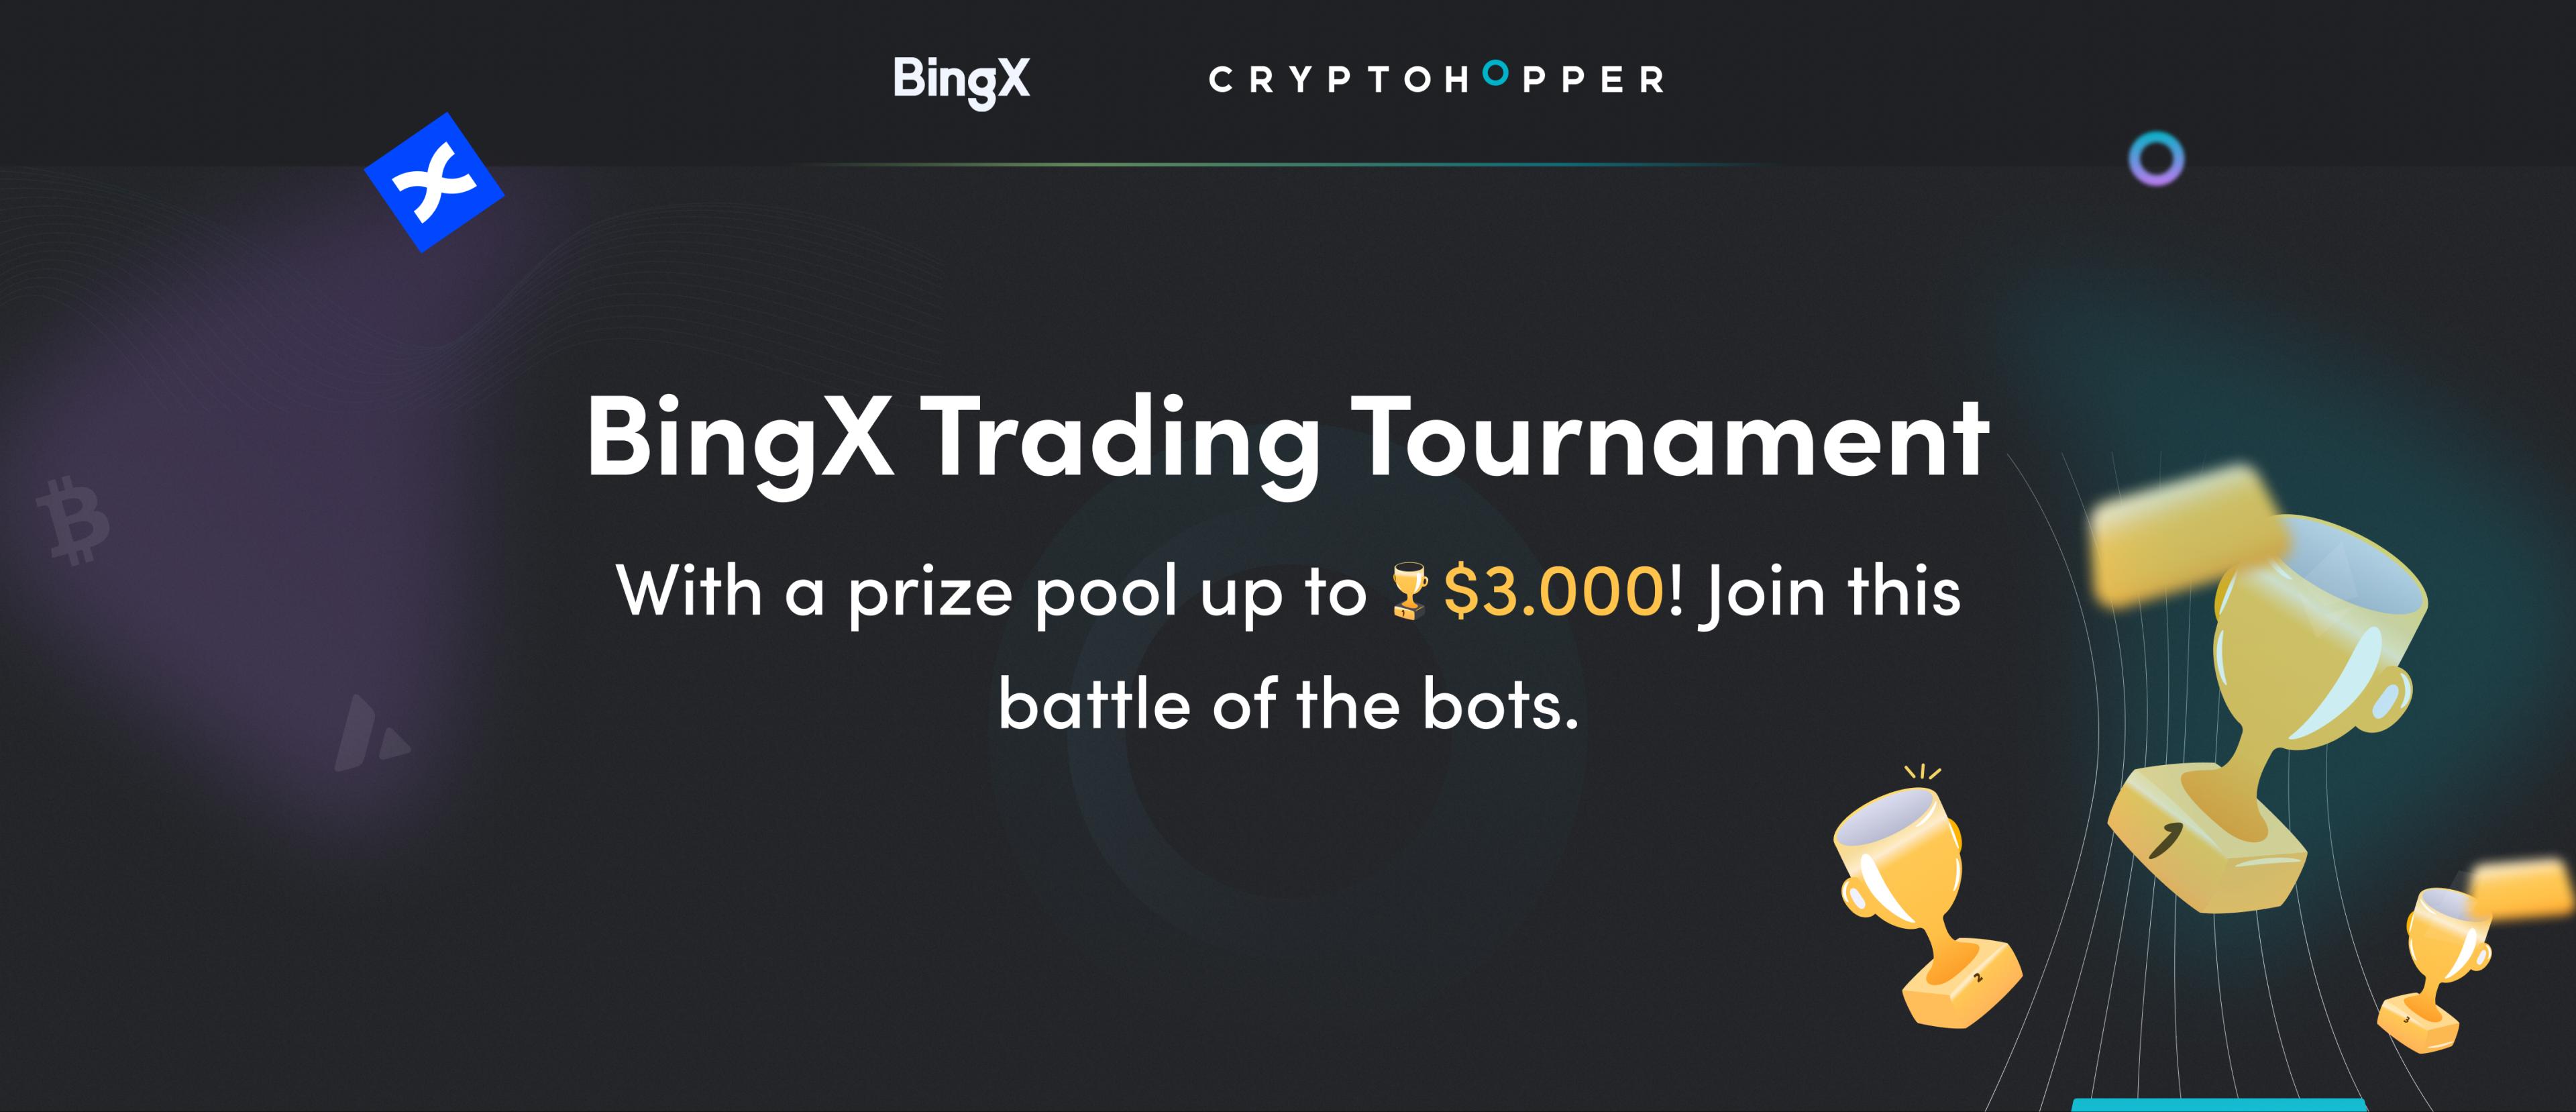 BingX and Cryptohopper Organize Bot Trading Tournament: Win Prizes! 